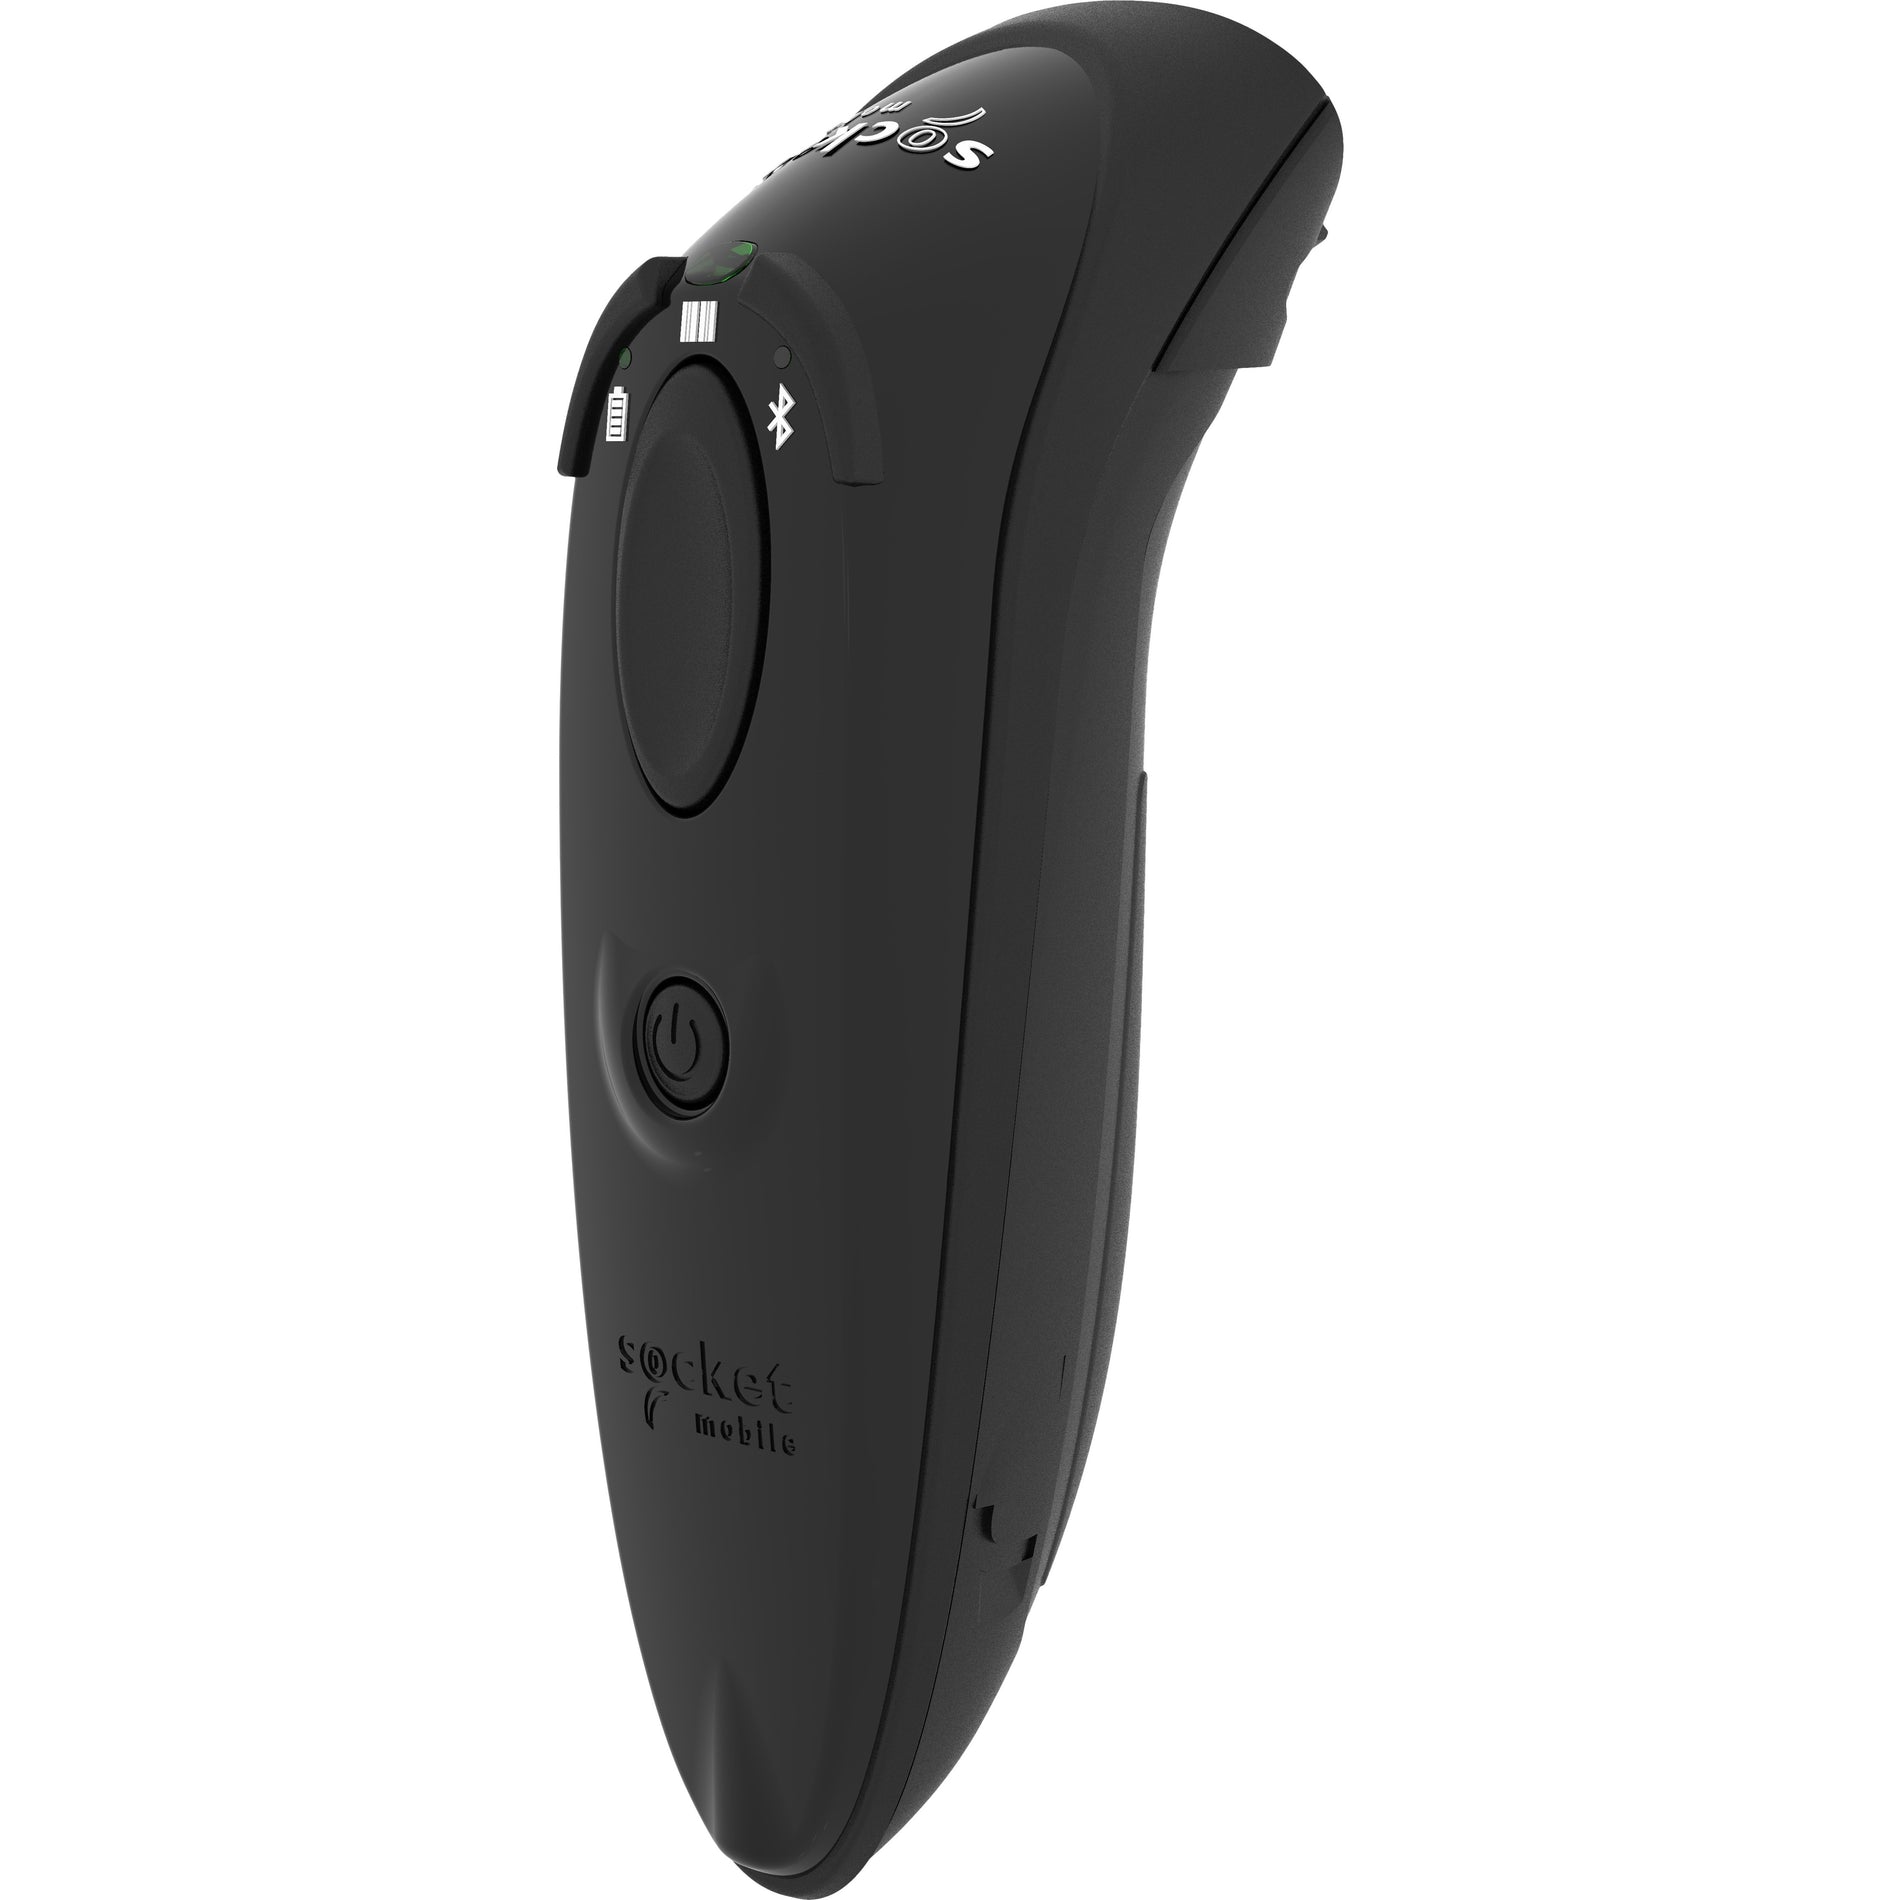 Socket Mobile CX3760-2412 DuraScan D740 Universal Barcode Scanner Black, Wireless 2D/1D Imager